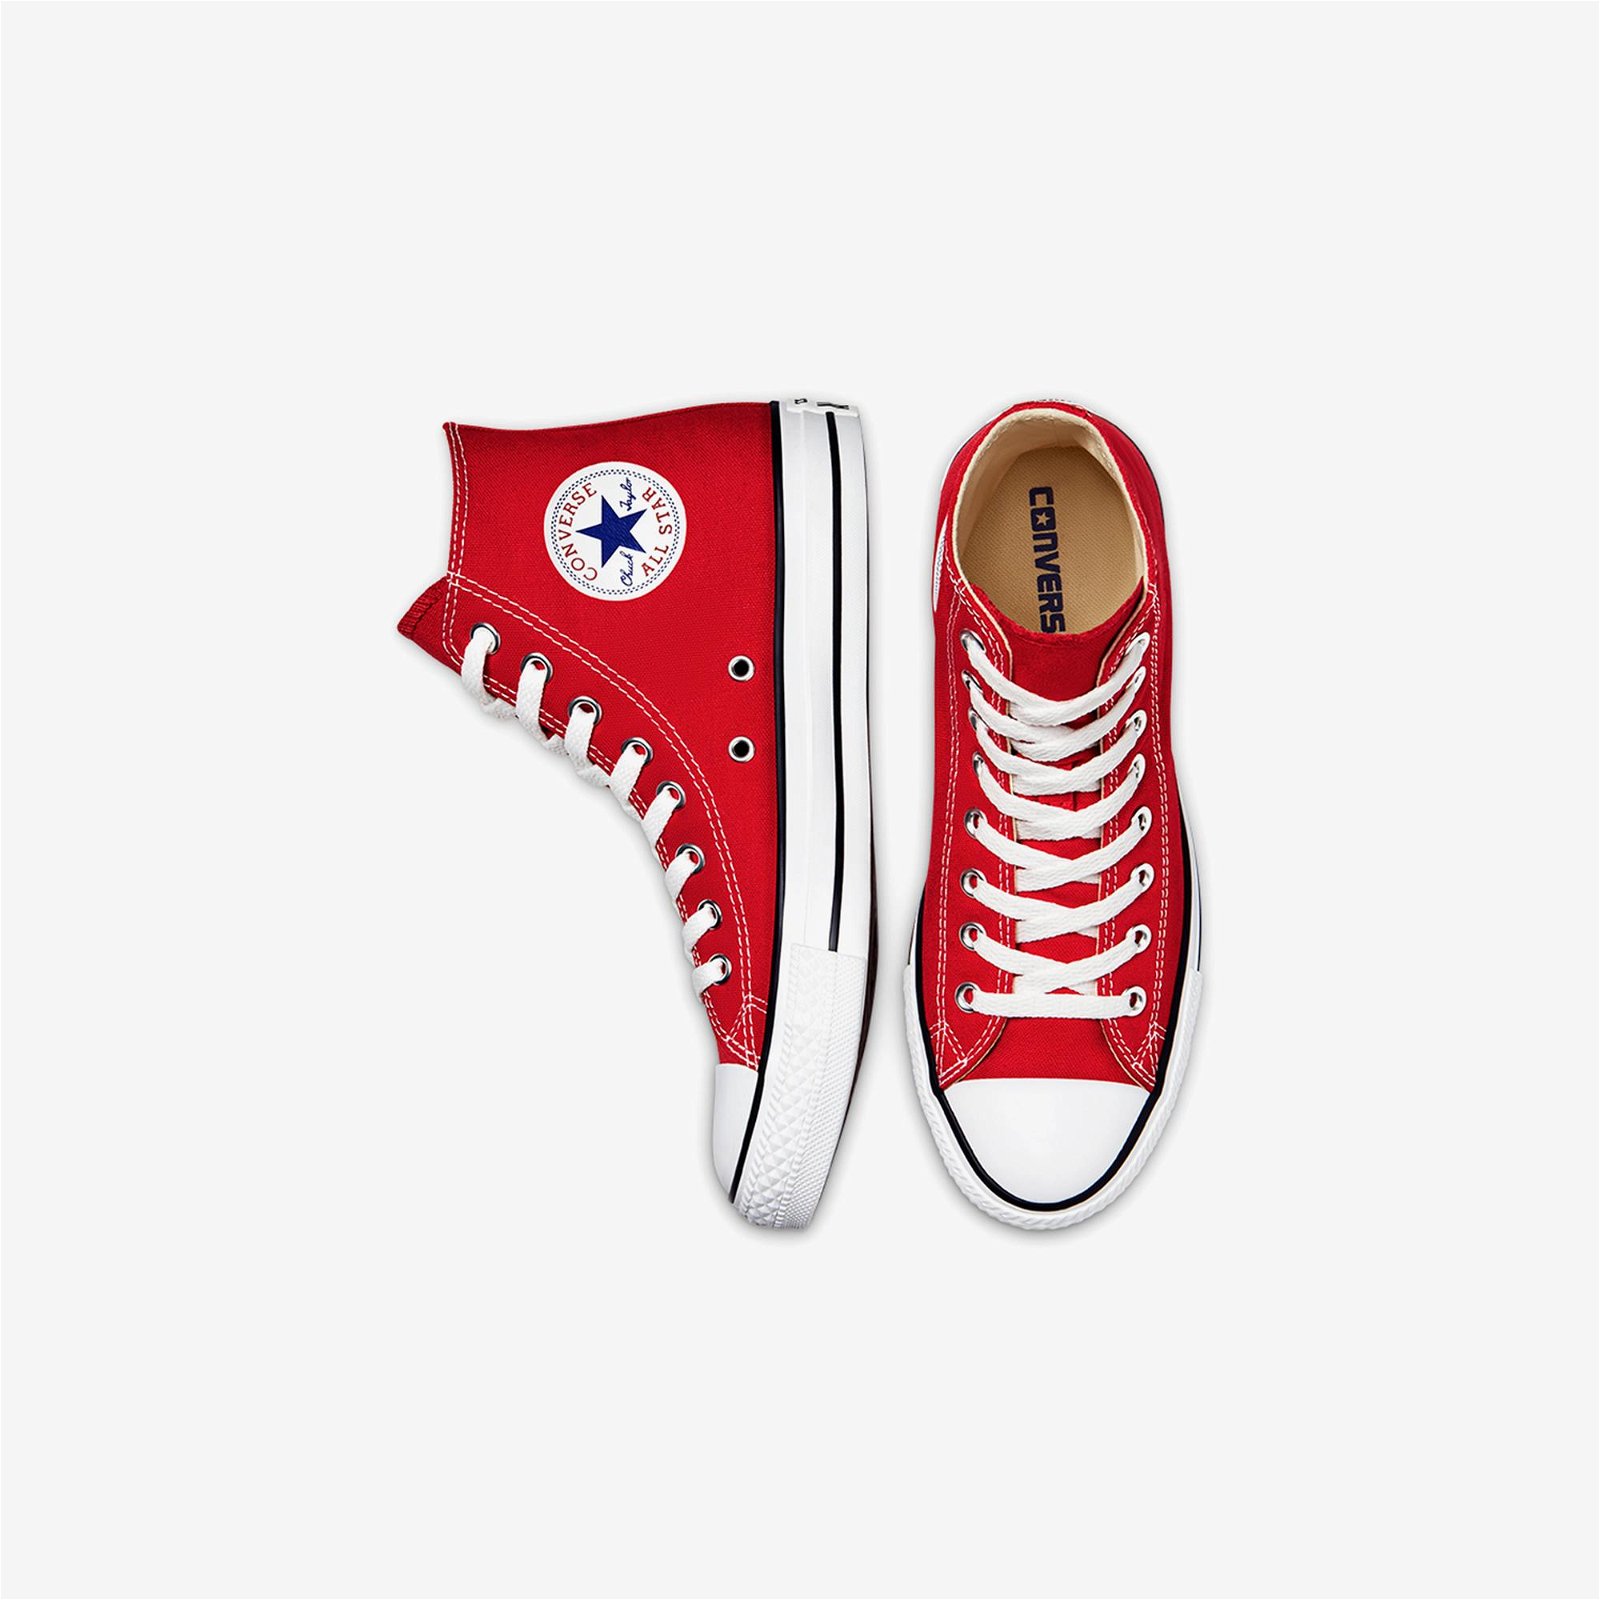 Converse Chuck Taylor All Star Hi Unisex Kırmızı Sneaker